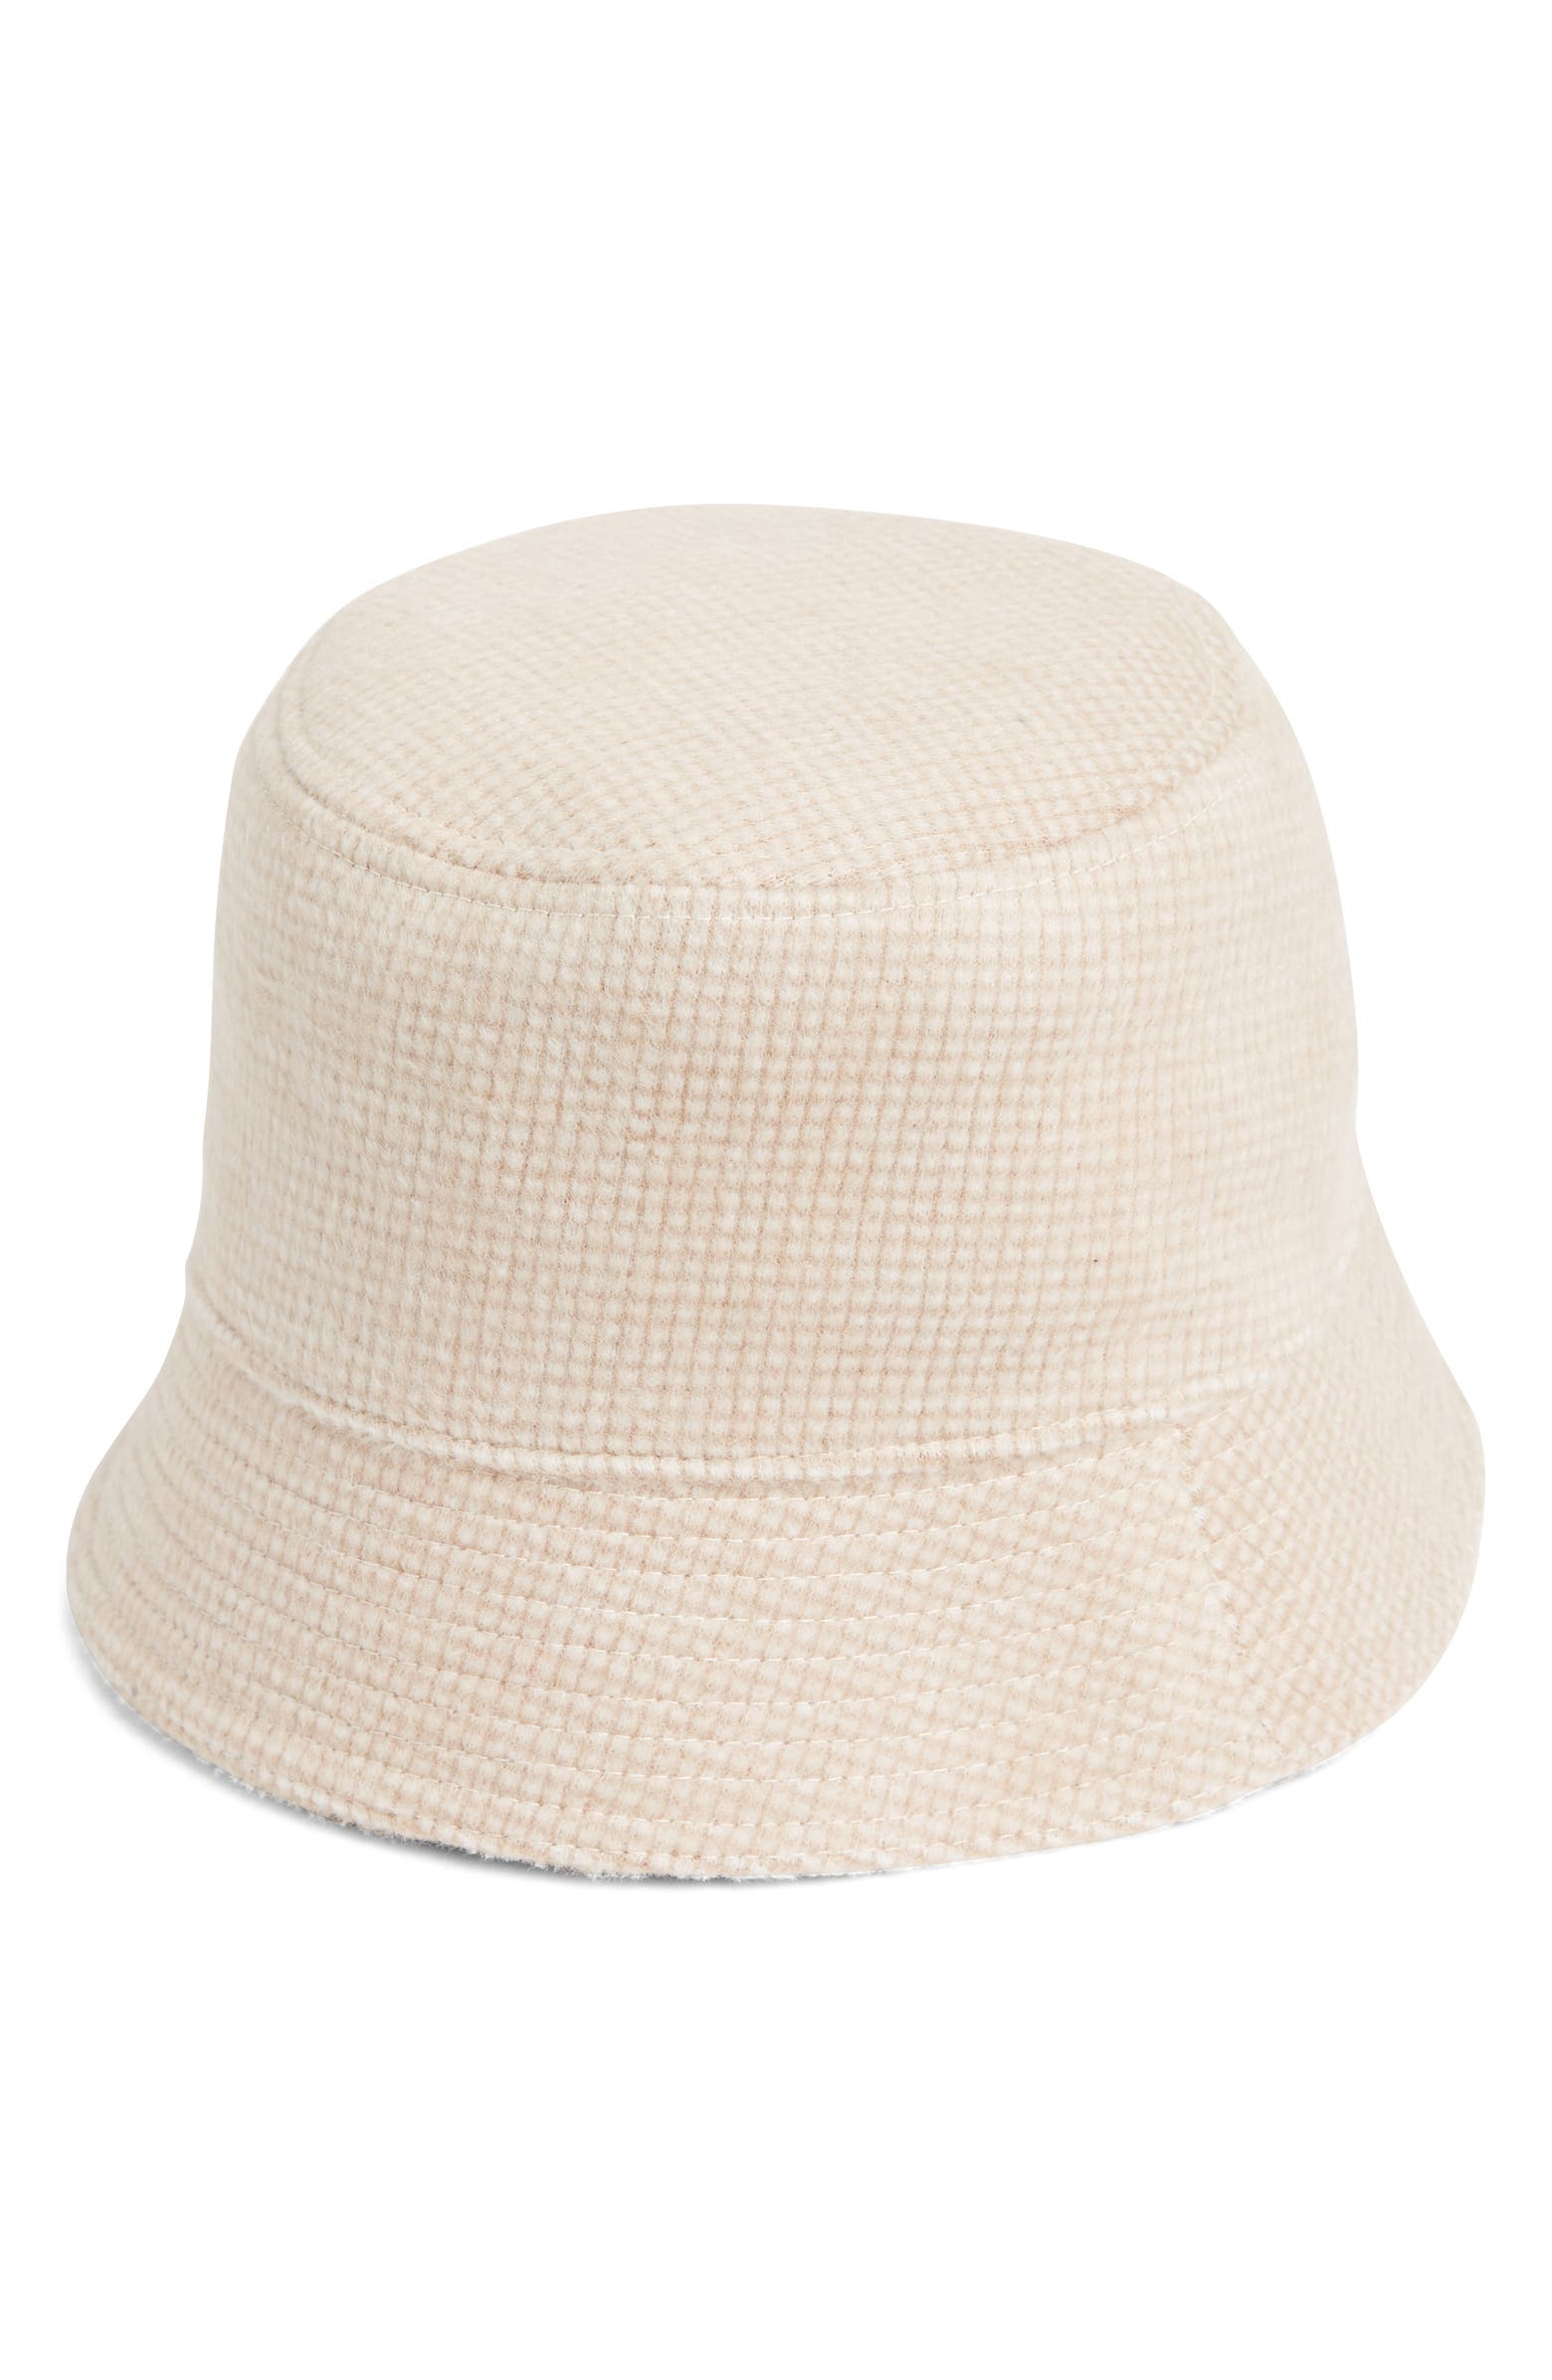 Steve Madden + Reversible Brushed Check PU Bucket Hat